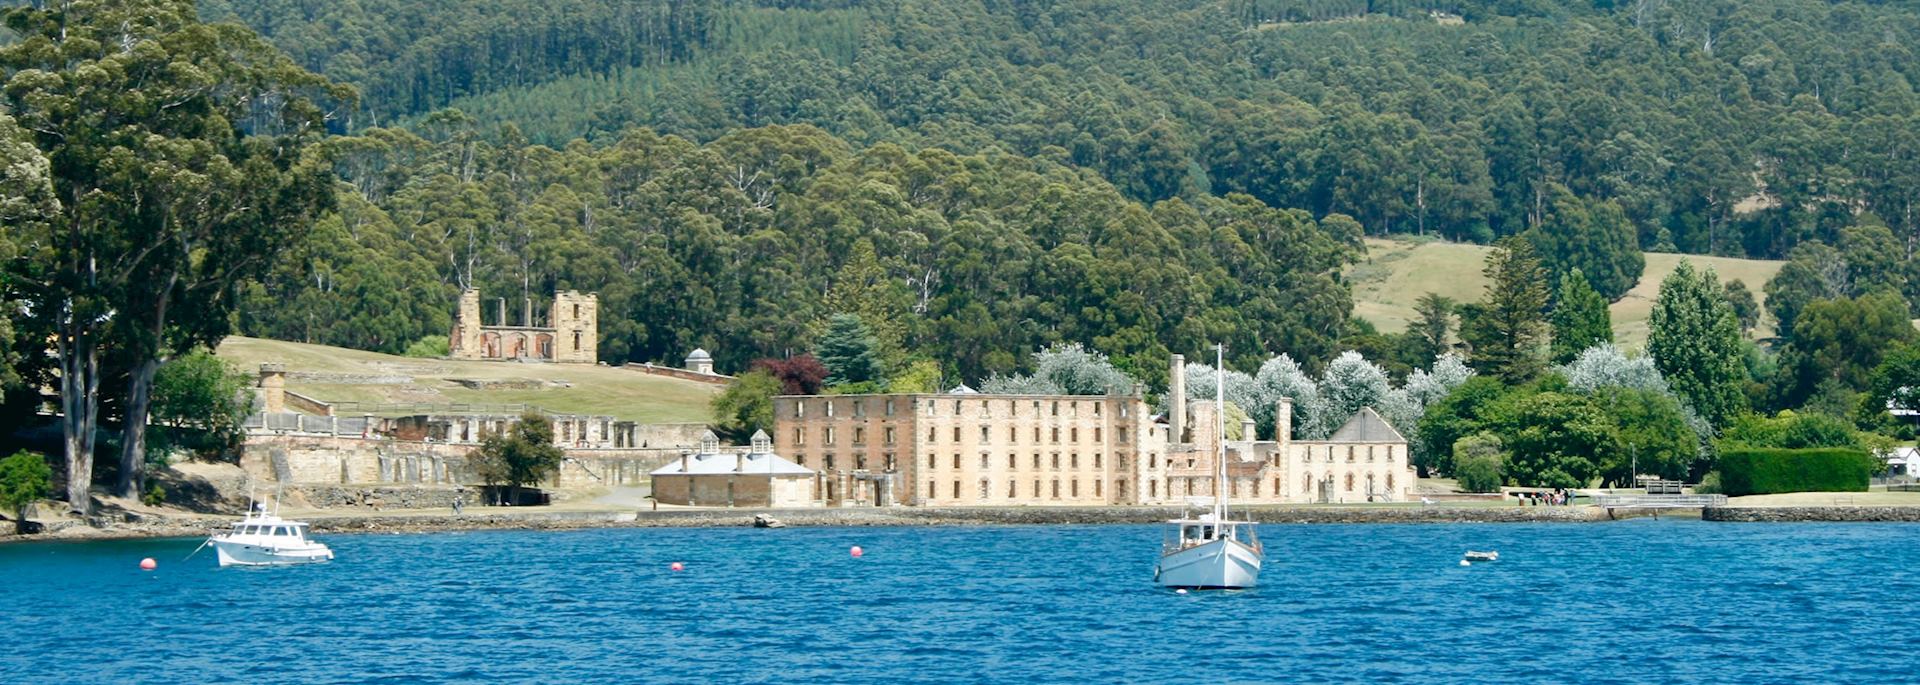 Historic prison and ruins in Port Arthur, Tasmania, Australia